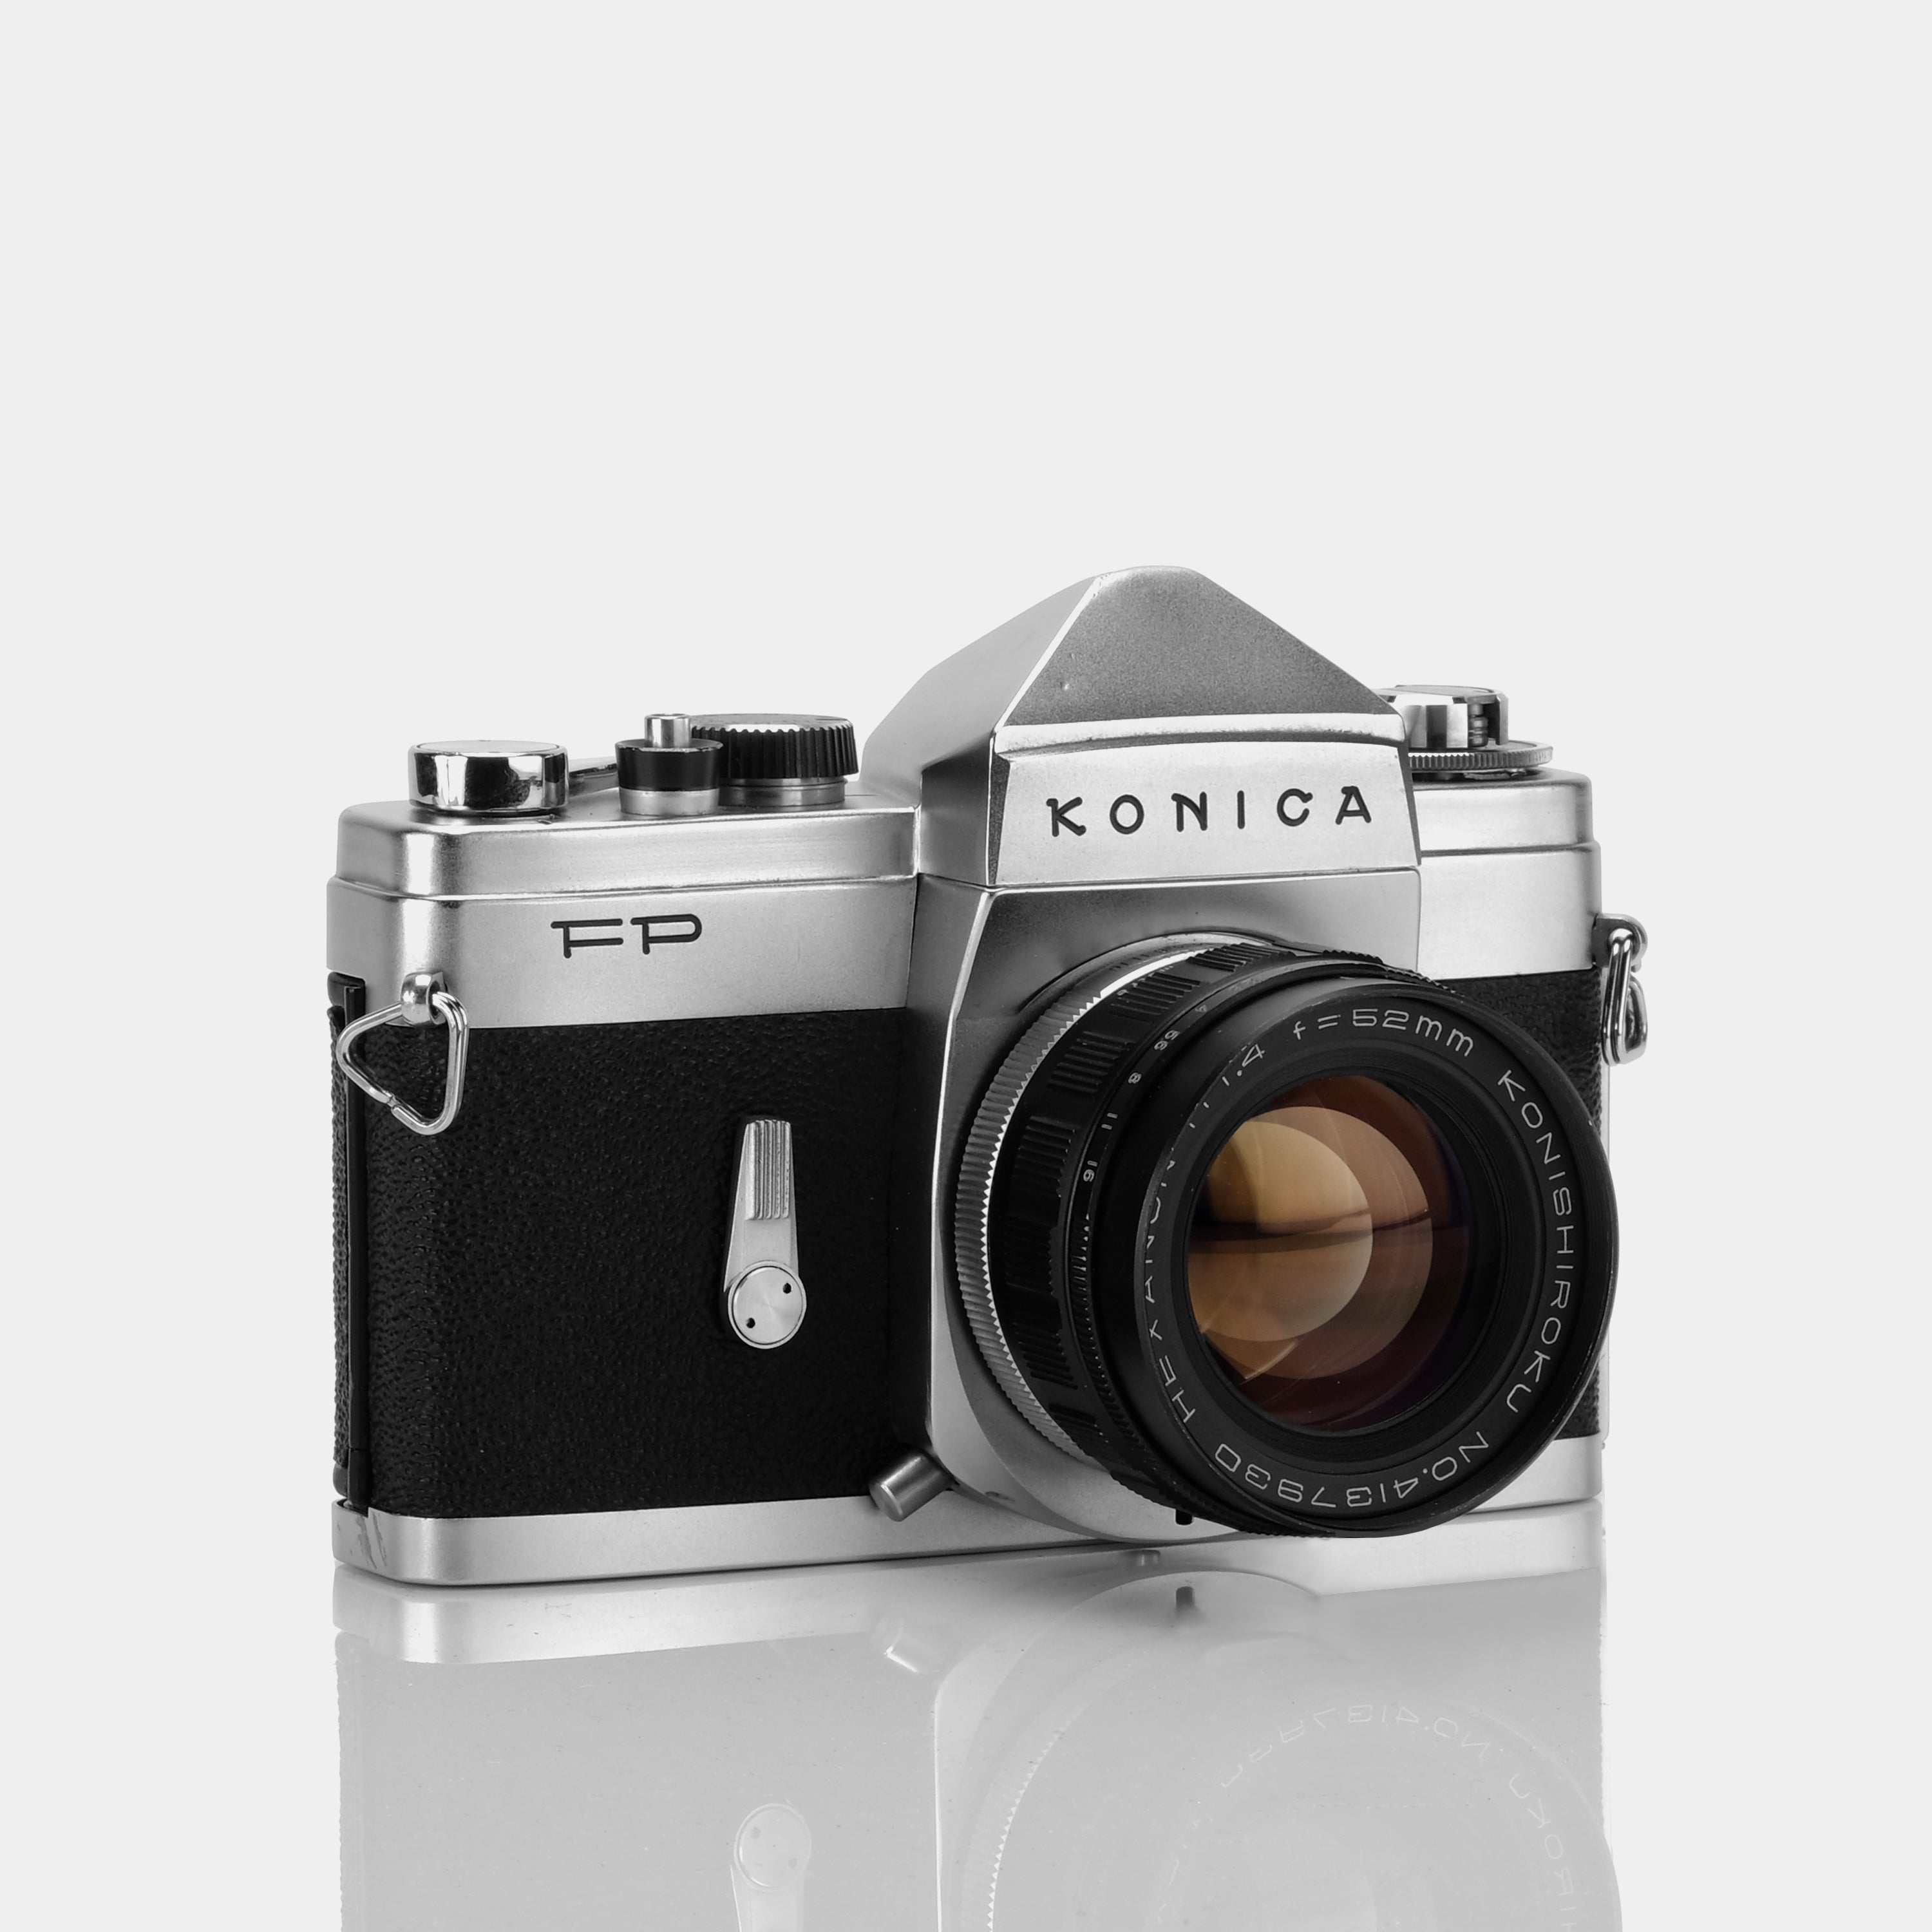 Konica FP 35mm SLR Film Camera